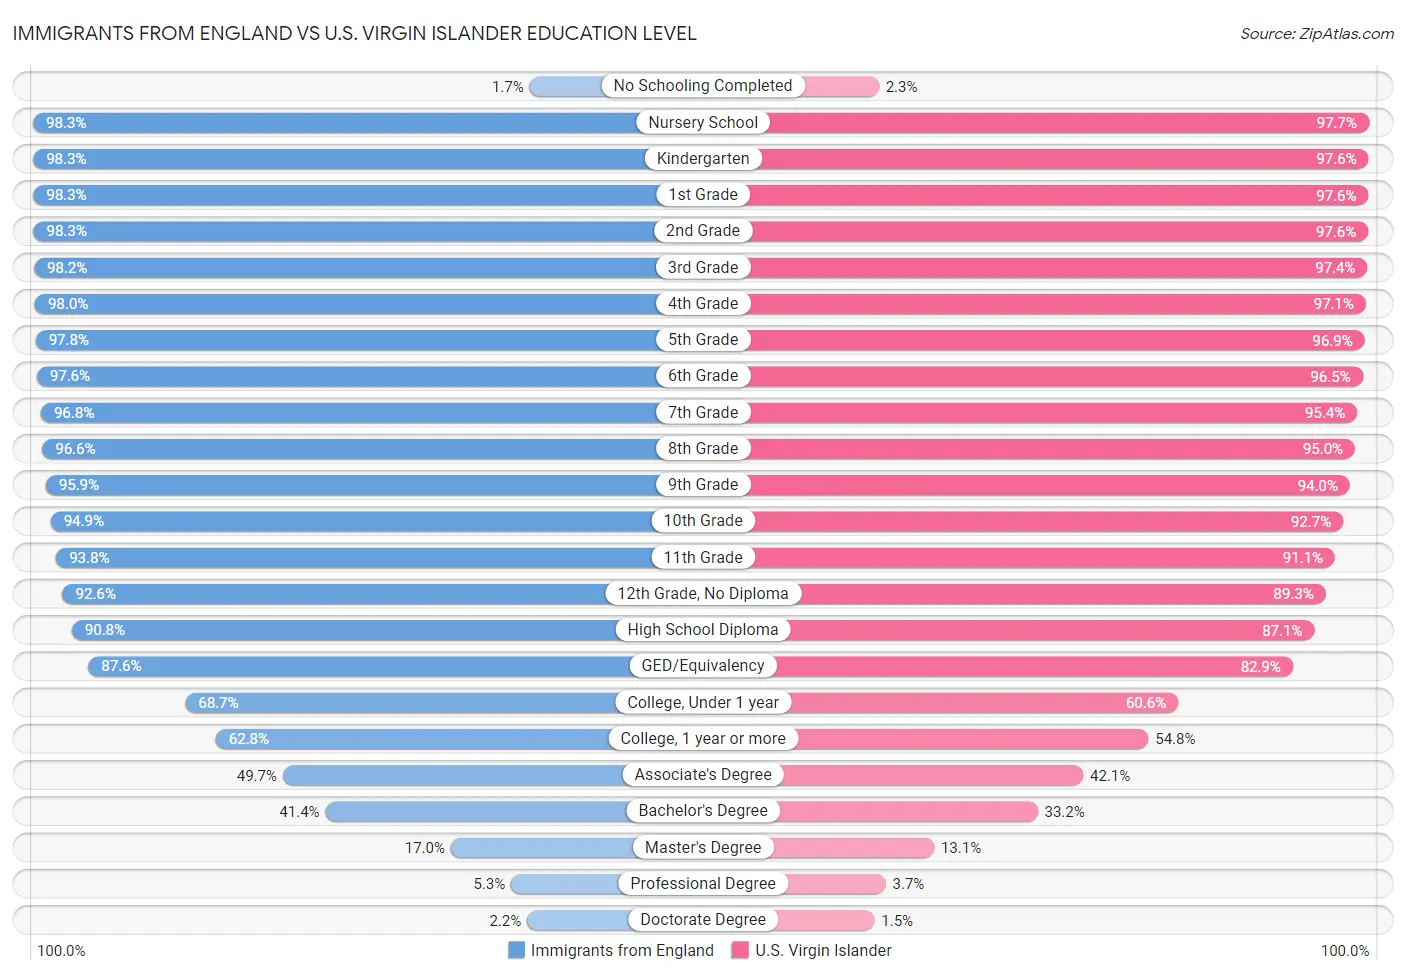 Immigrants from England vs U.S. Virgin Islander Education Level